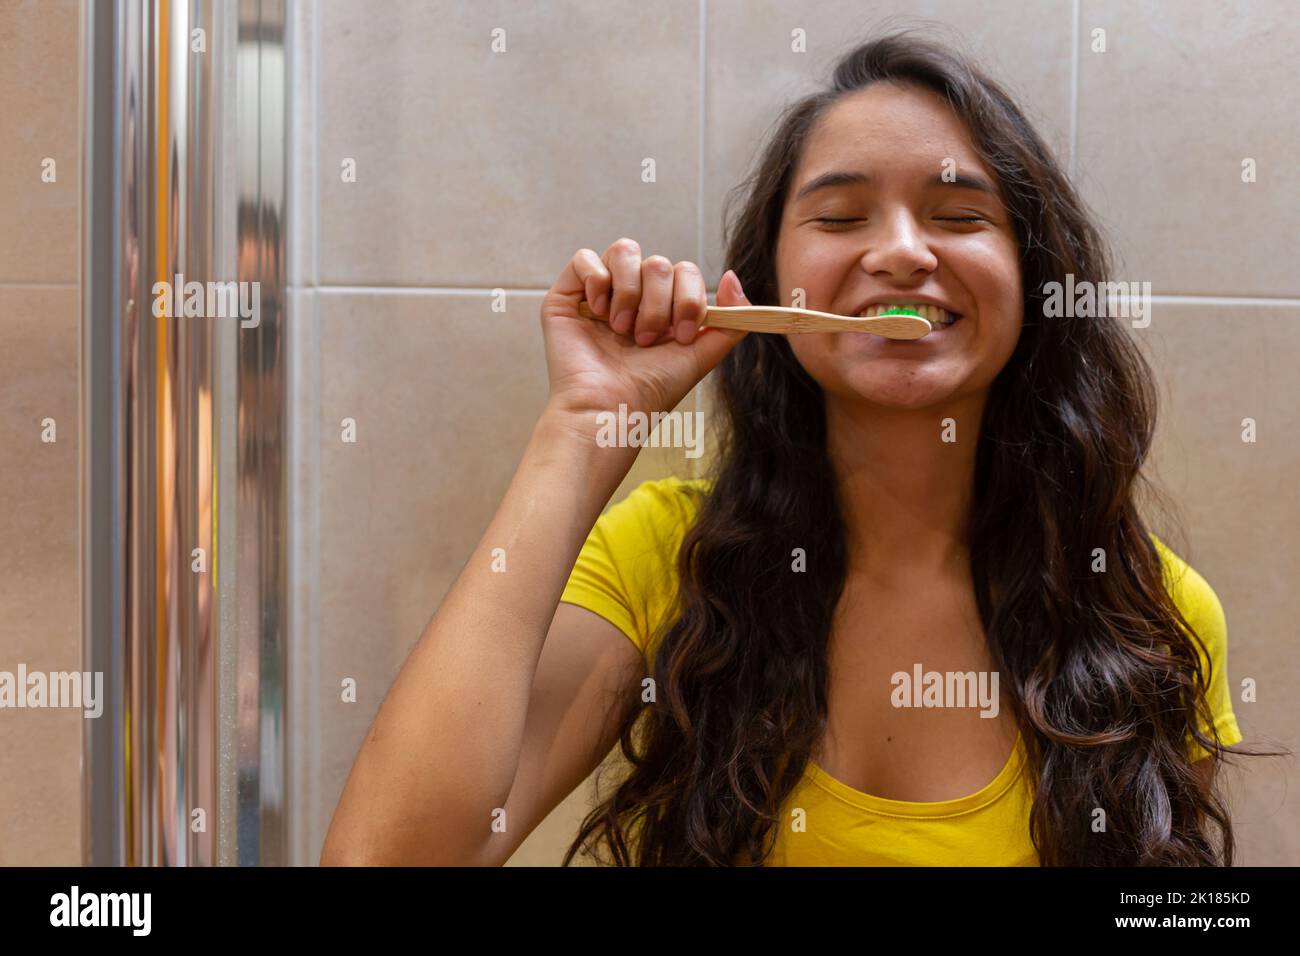 Young woman brushing teeth in bathroom Stock Photo